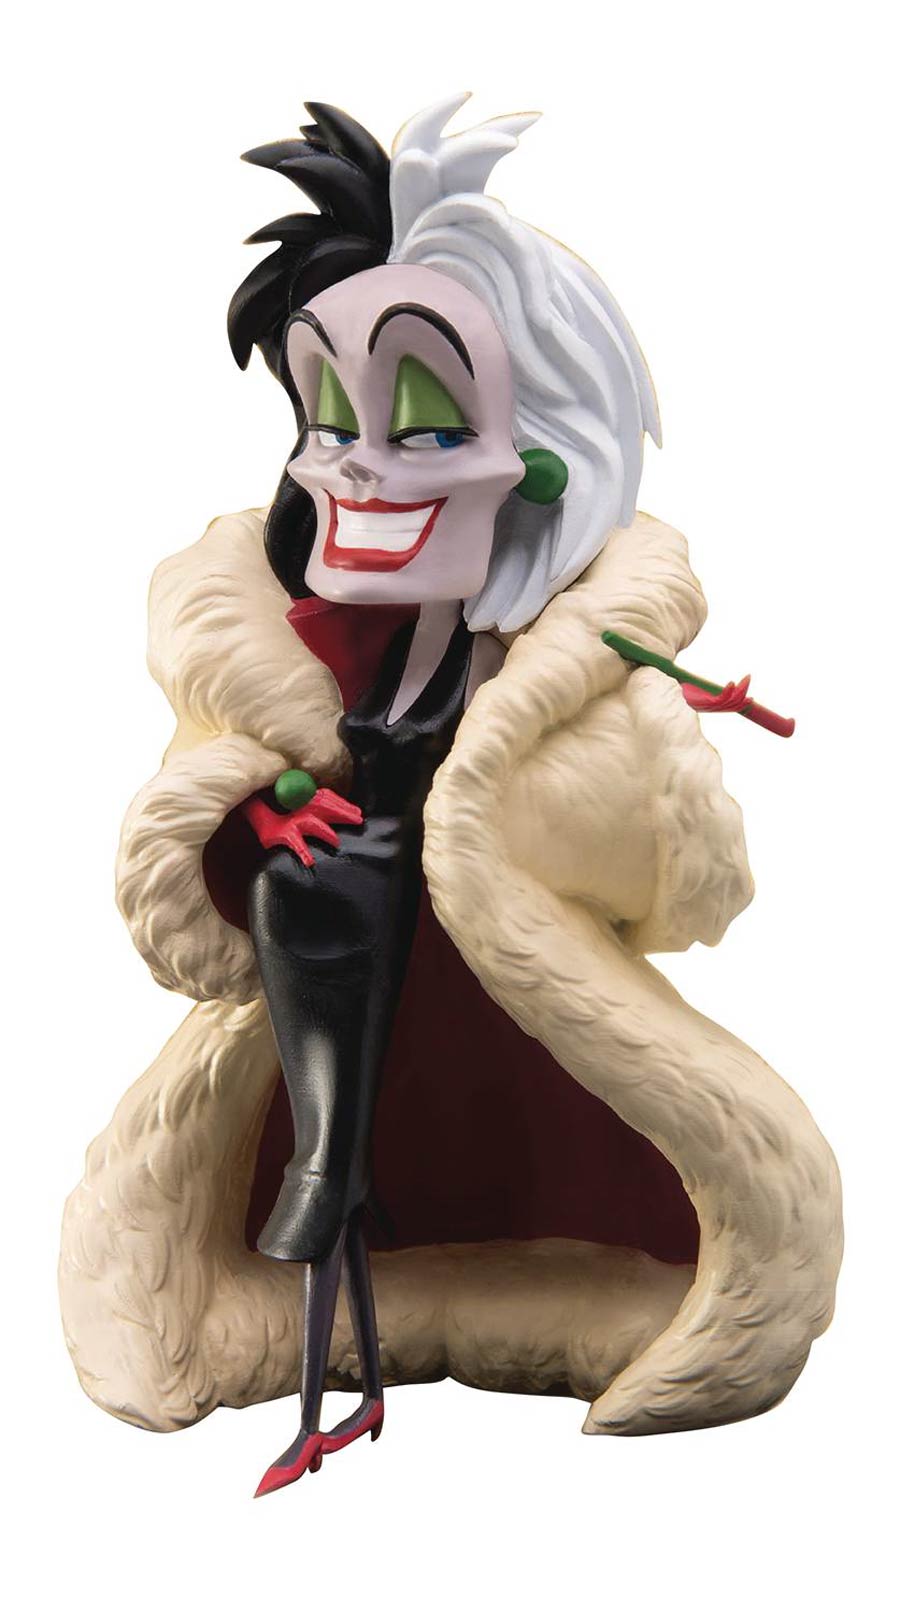 Disney Villains MEA-007 Cruella Previews Exclusive Figure